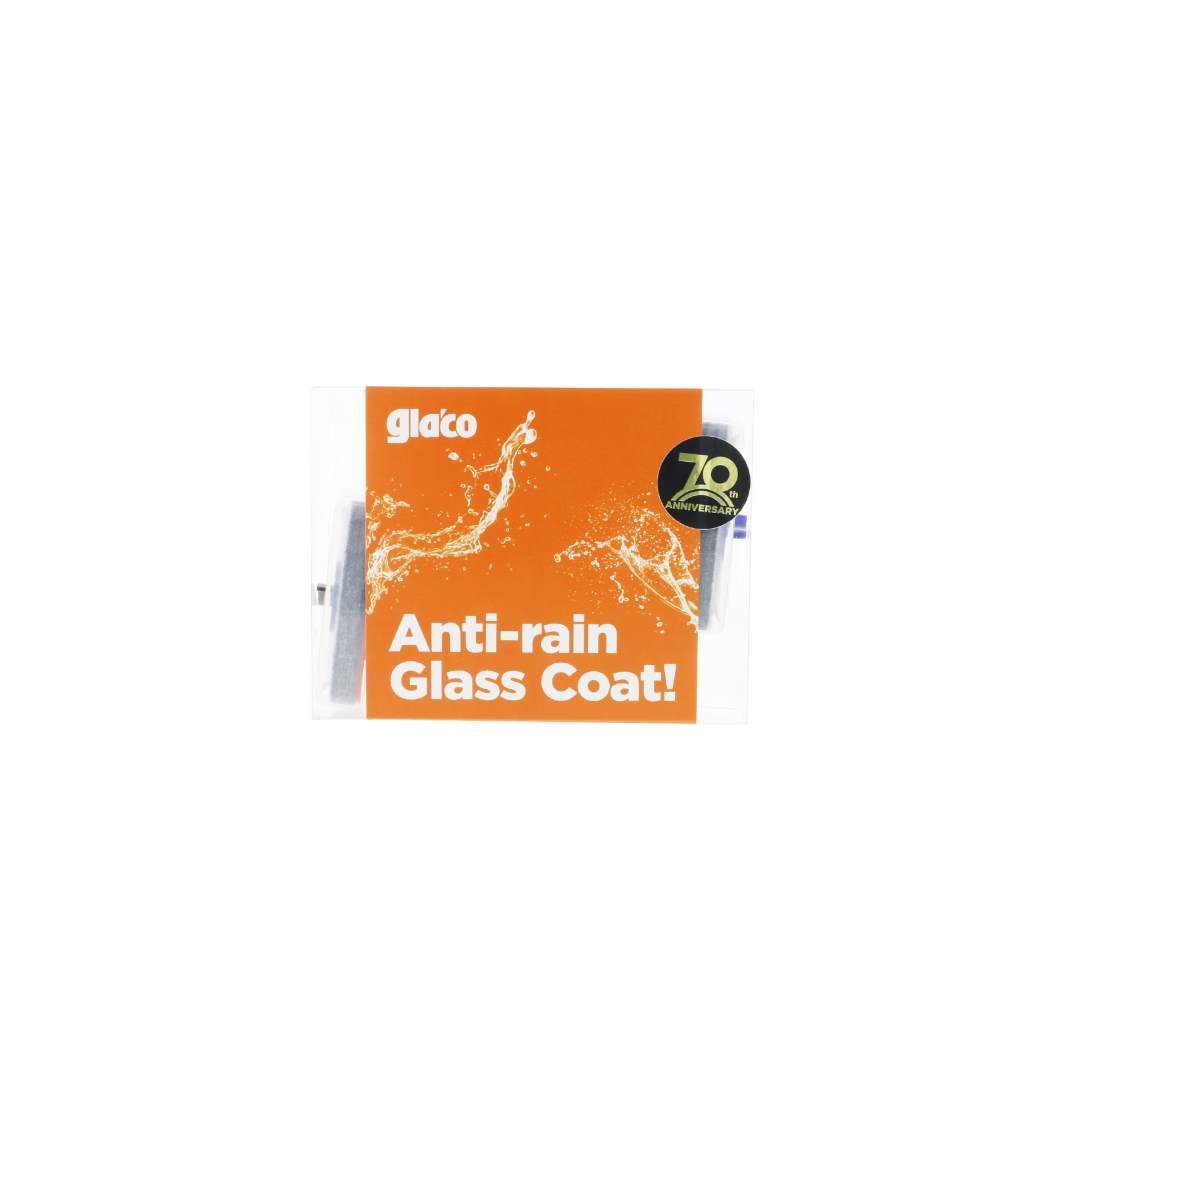 Glaco Anti-Rain Glass Coat Kit